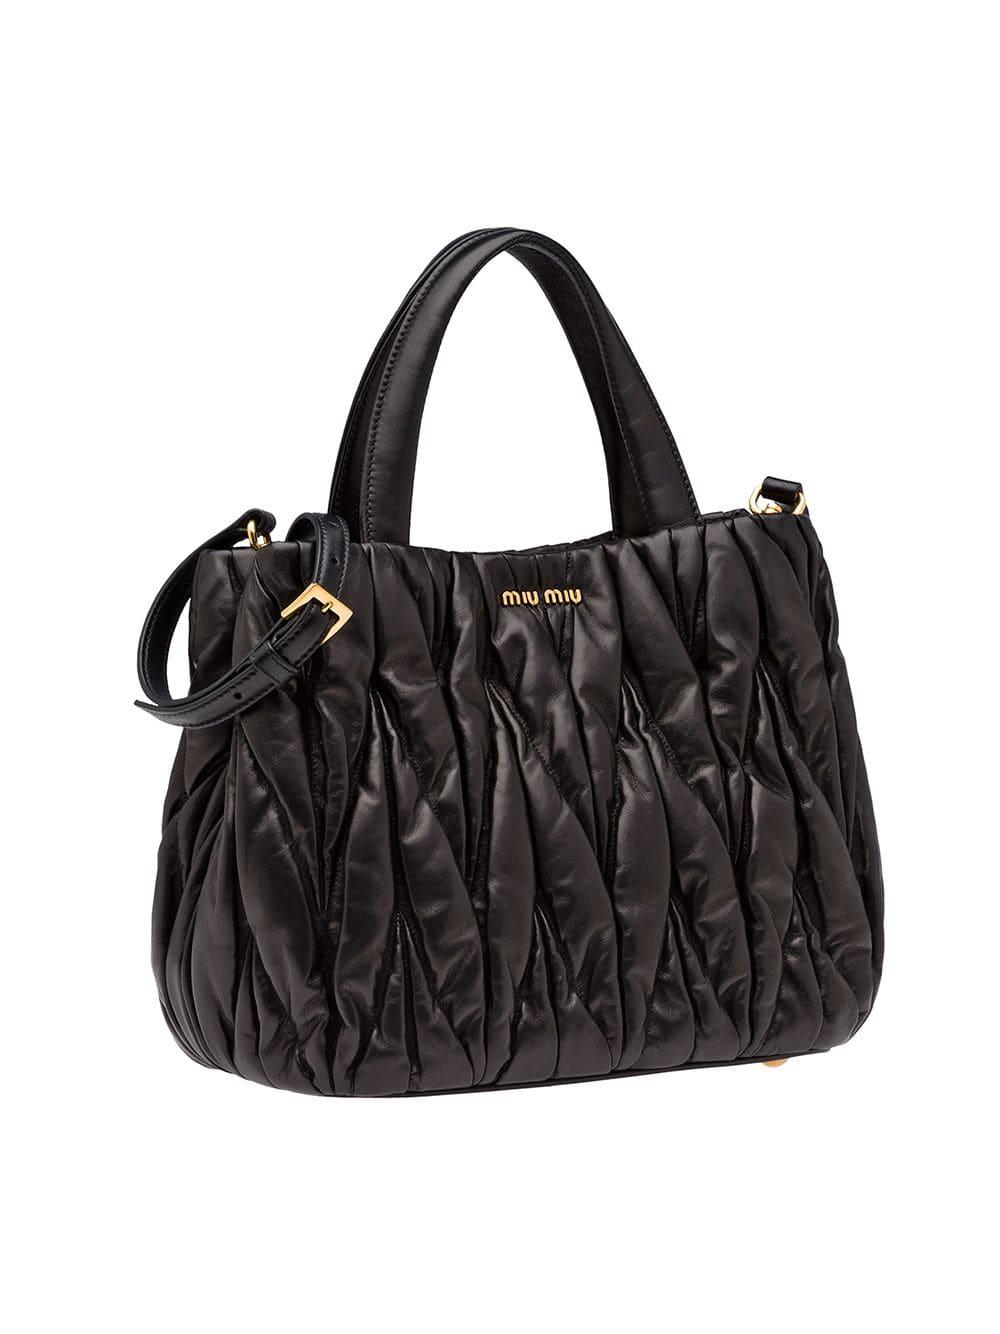 Miu Miu - Authenticated Matelassé Handbag - Leather Black Plain for Women, Very Good Condition